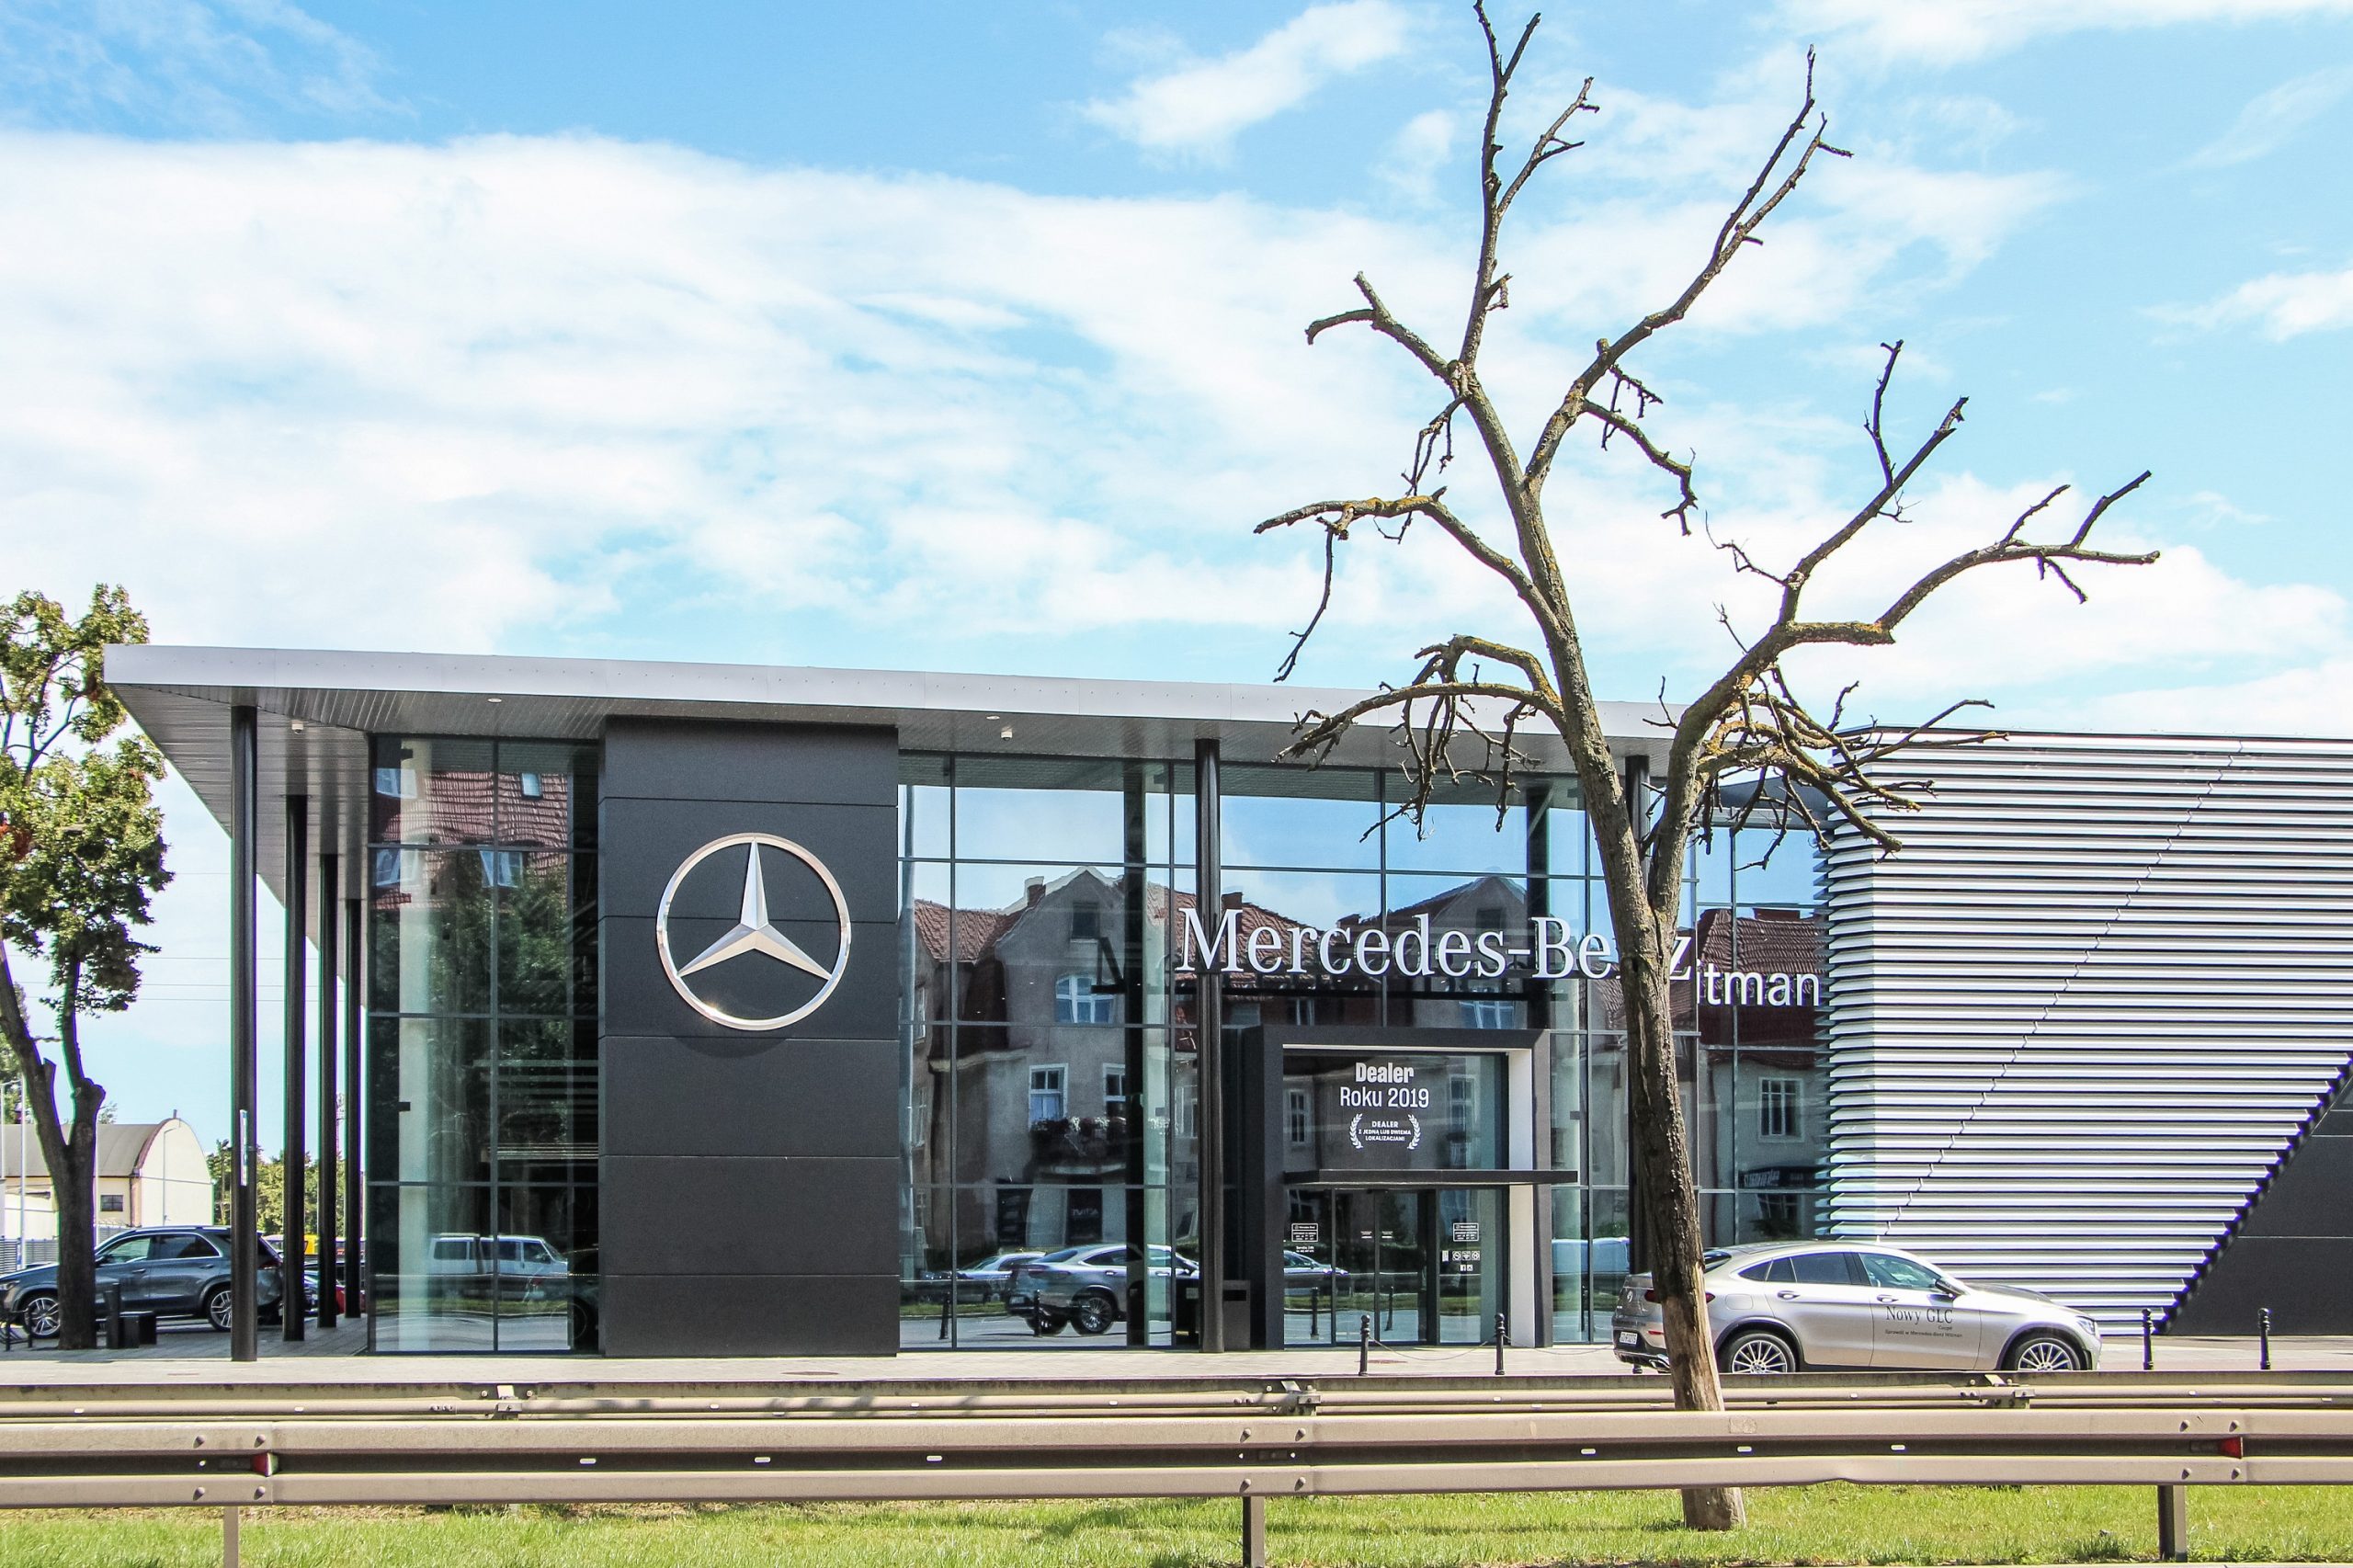 A Mercedes-Benz dealership